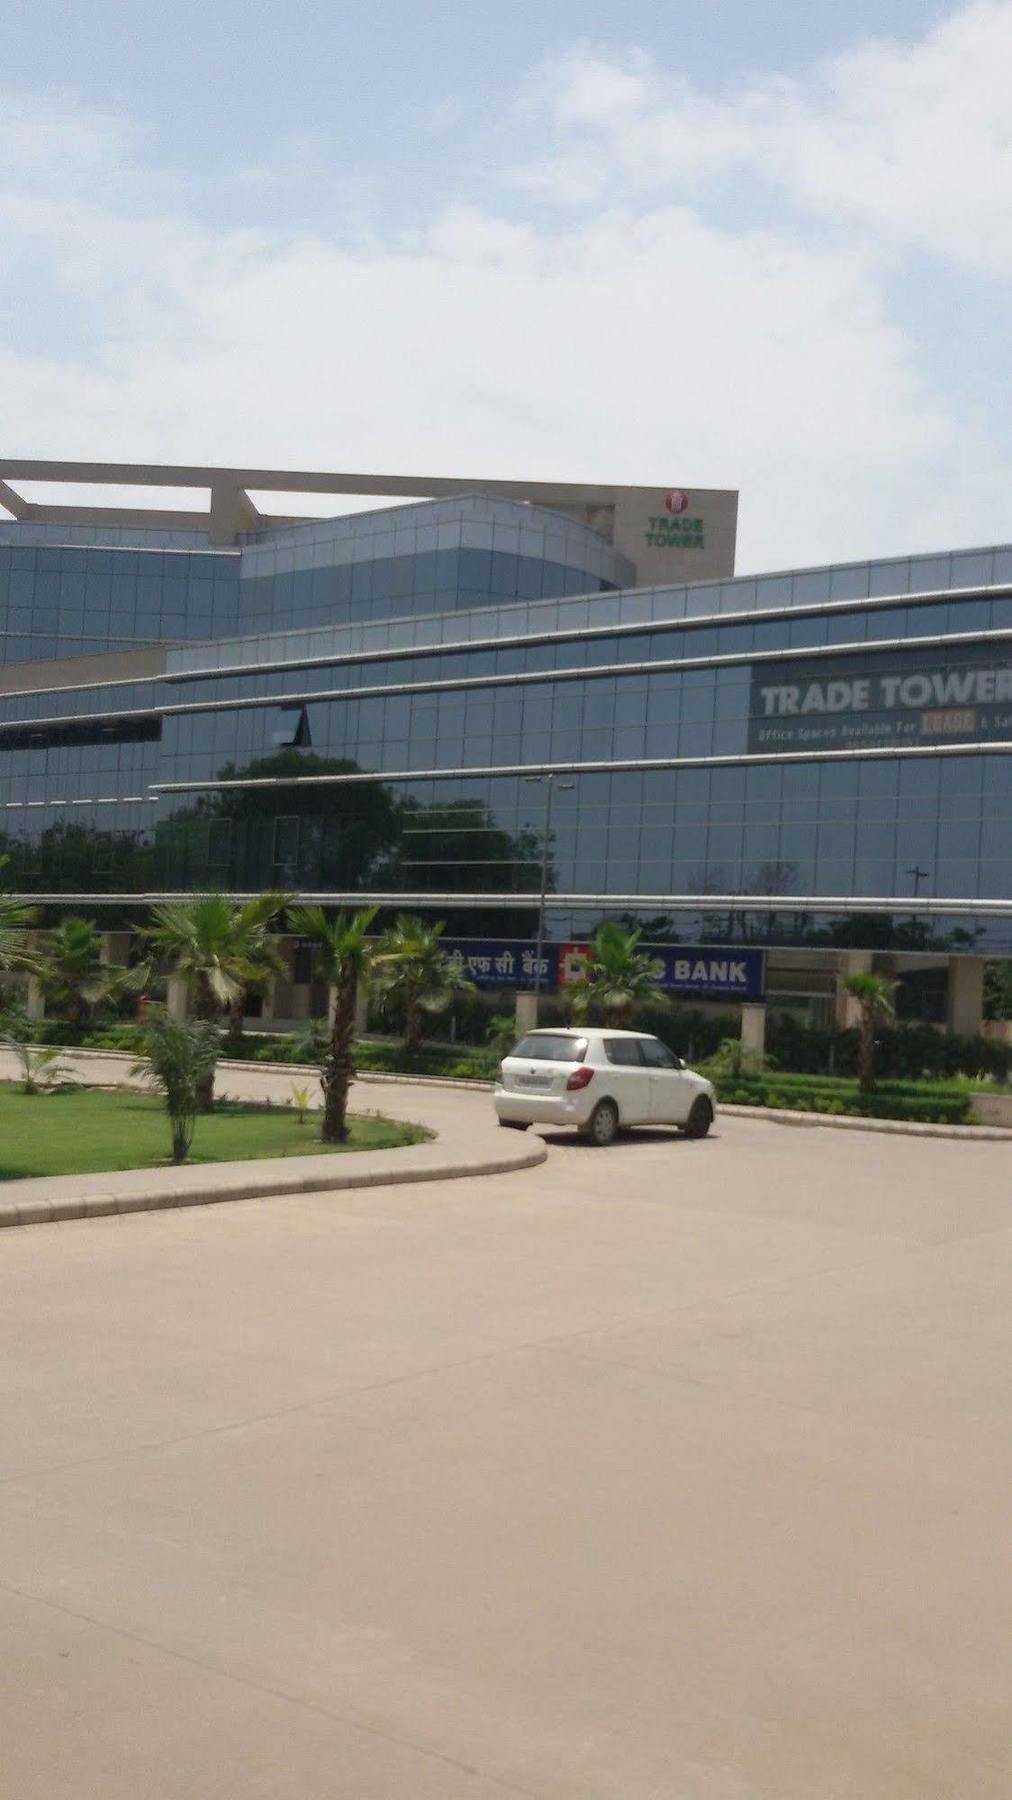 Trinity Corporate Udyog Vihar Hotel Gurgaon Buitenkant foto